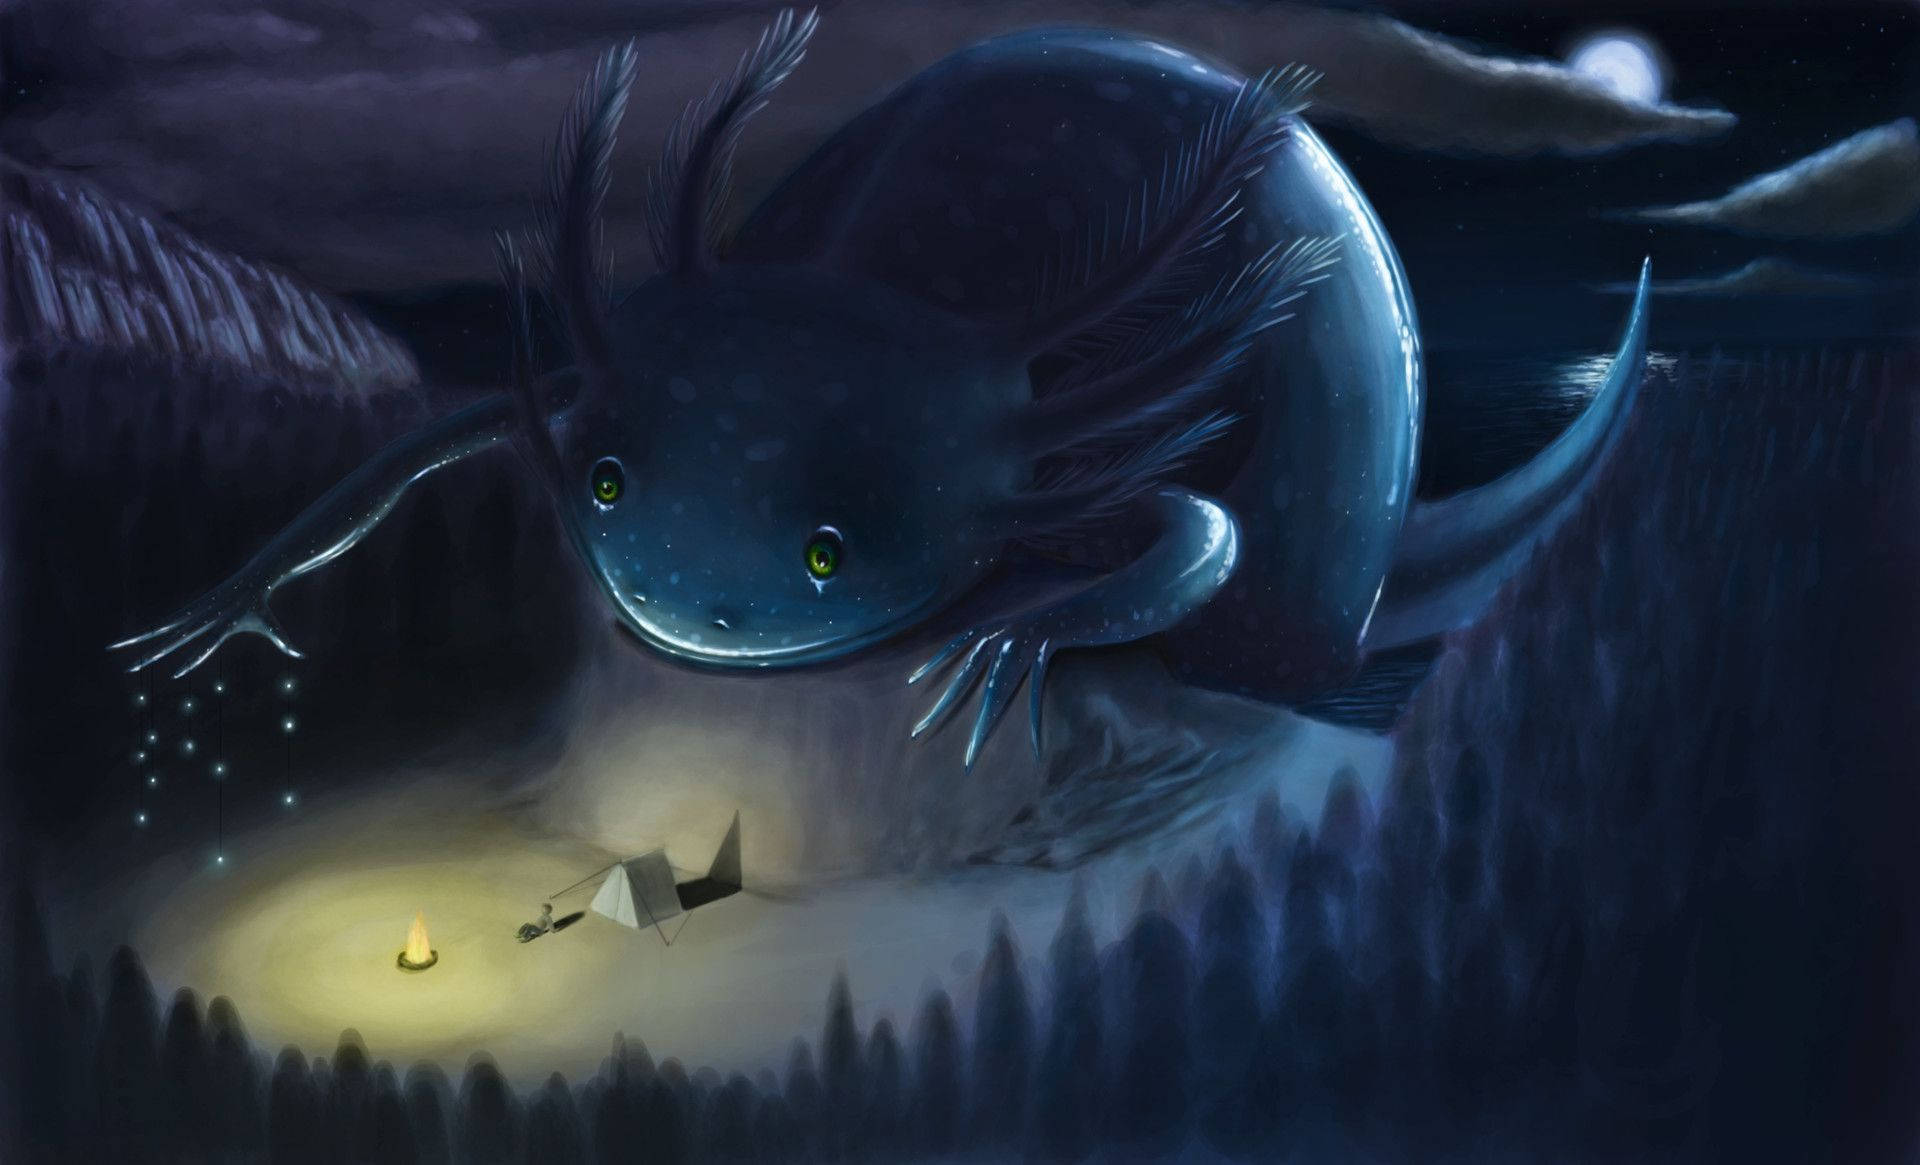 Boy And Axolotl Digital Art Background